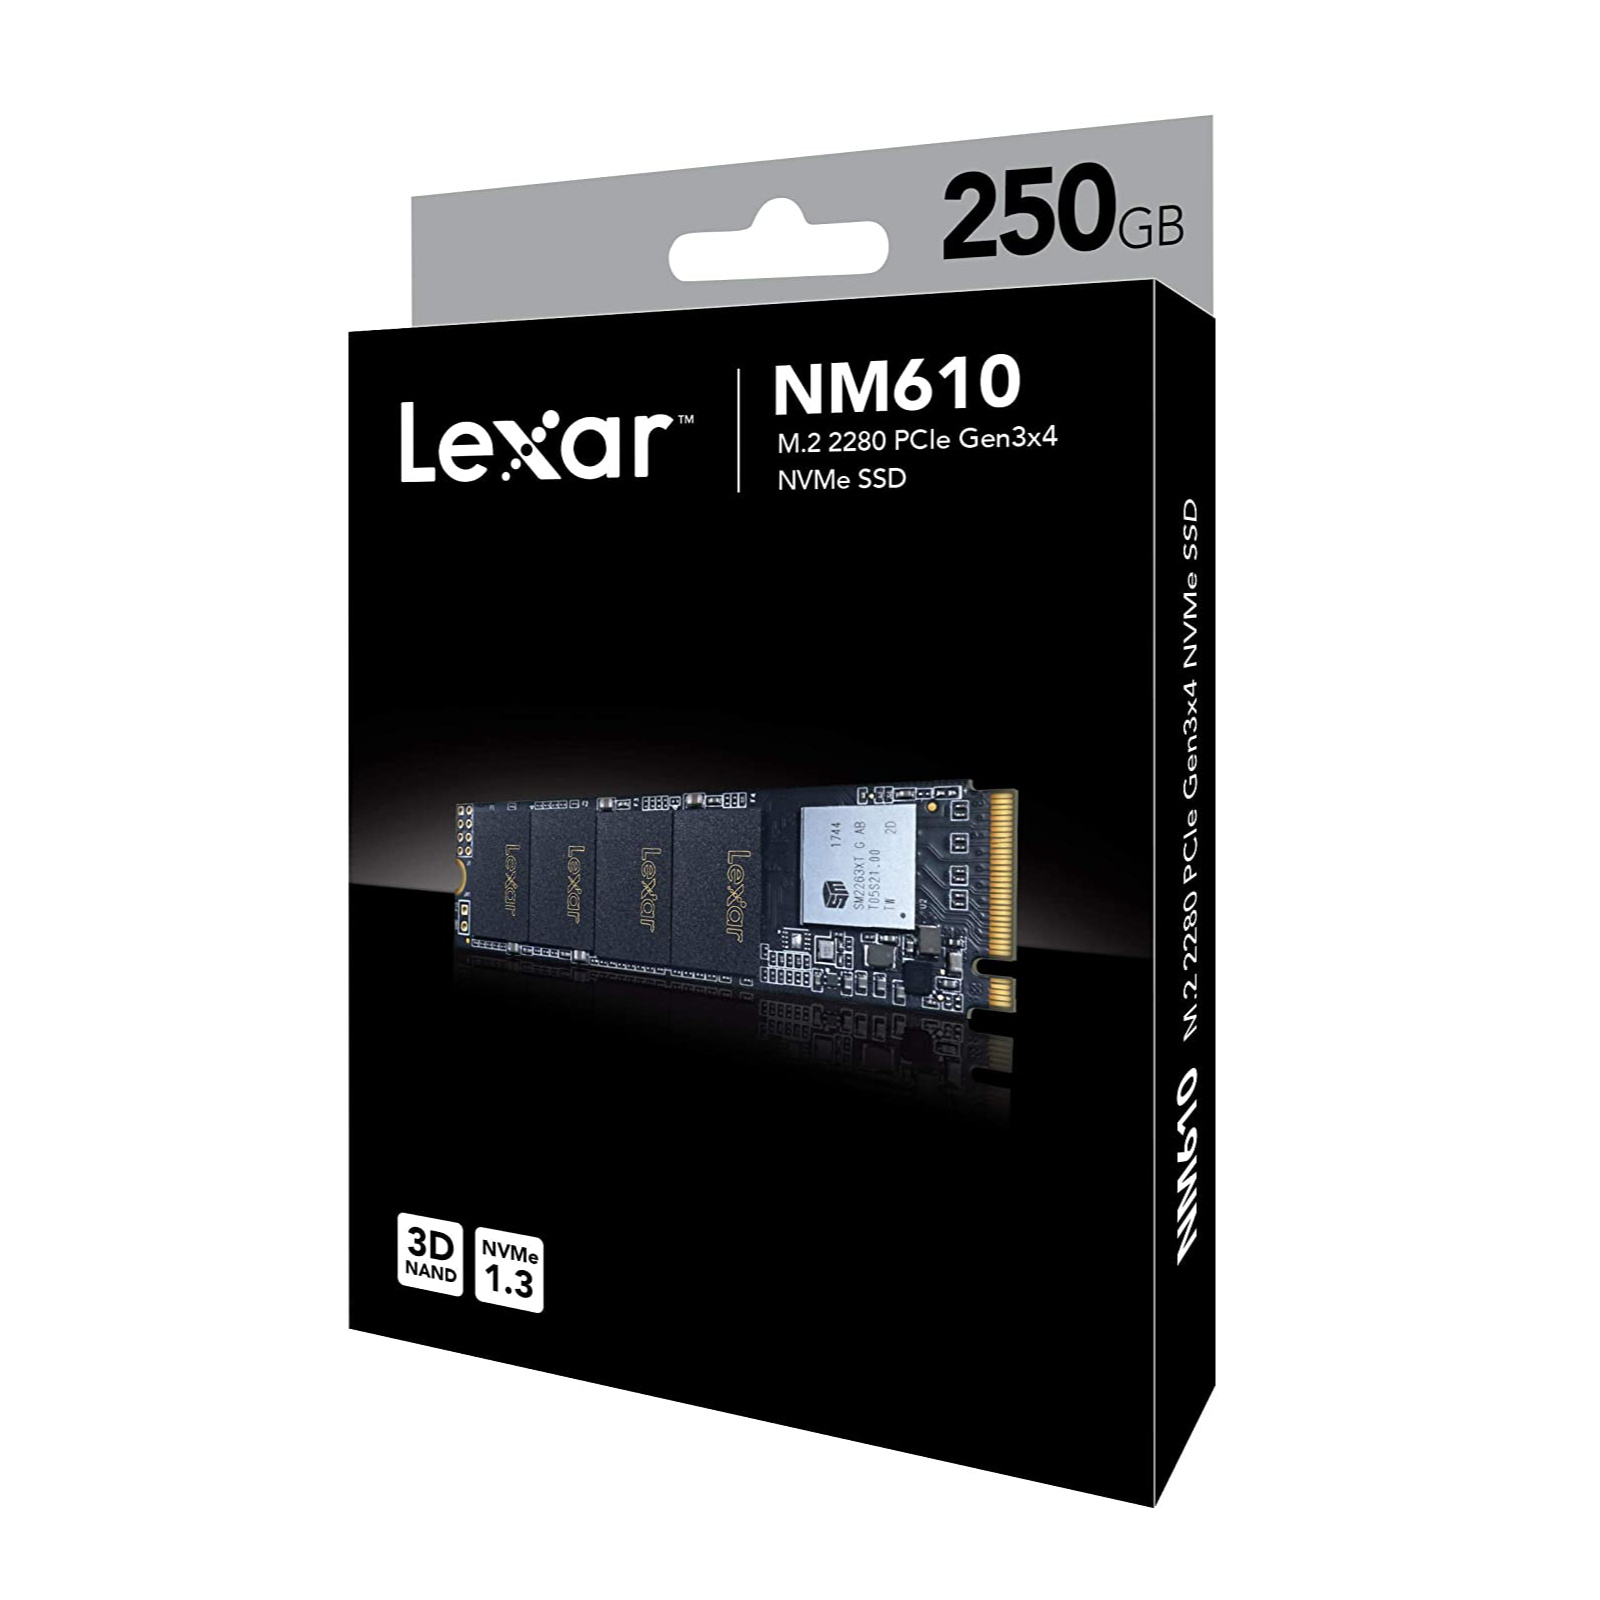 Lexar NM610 256 GB 